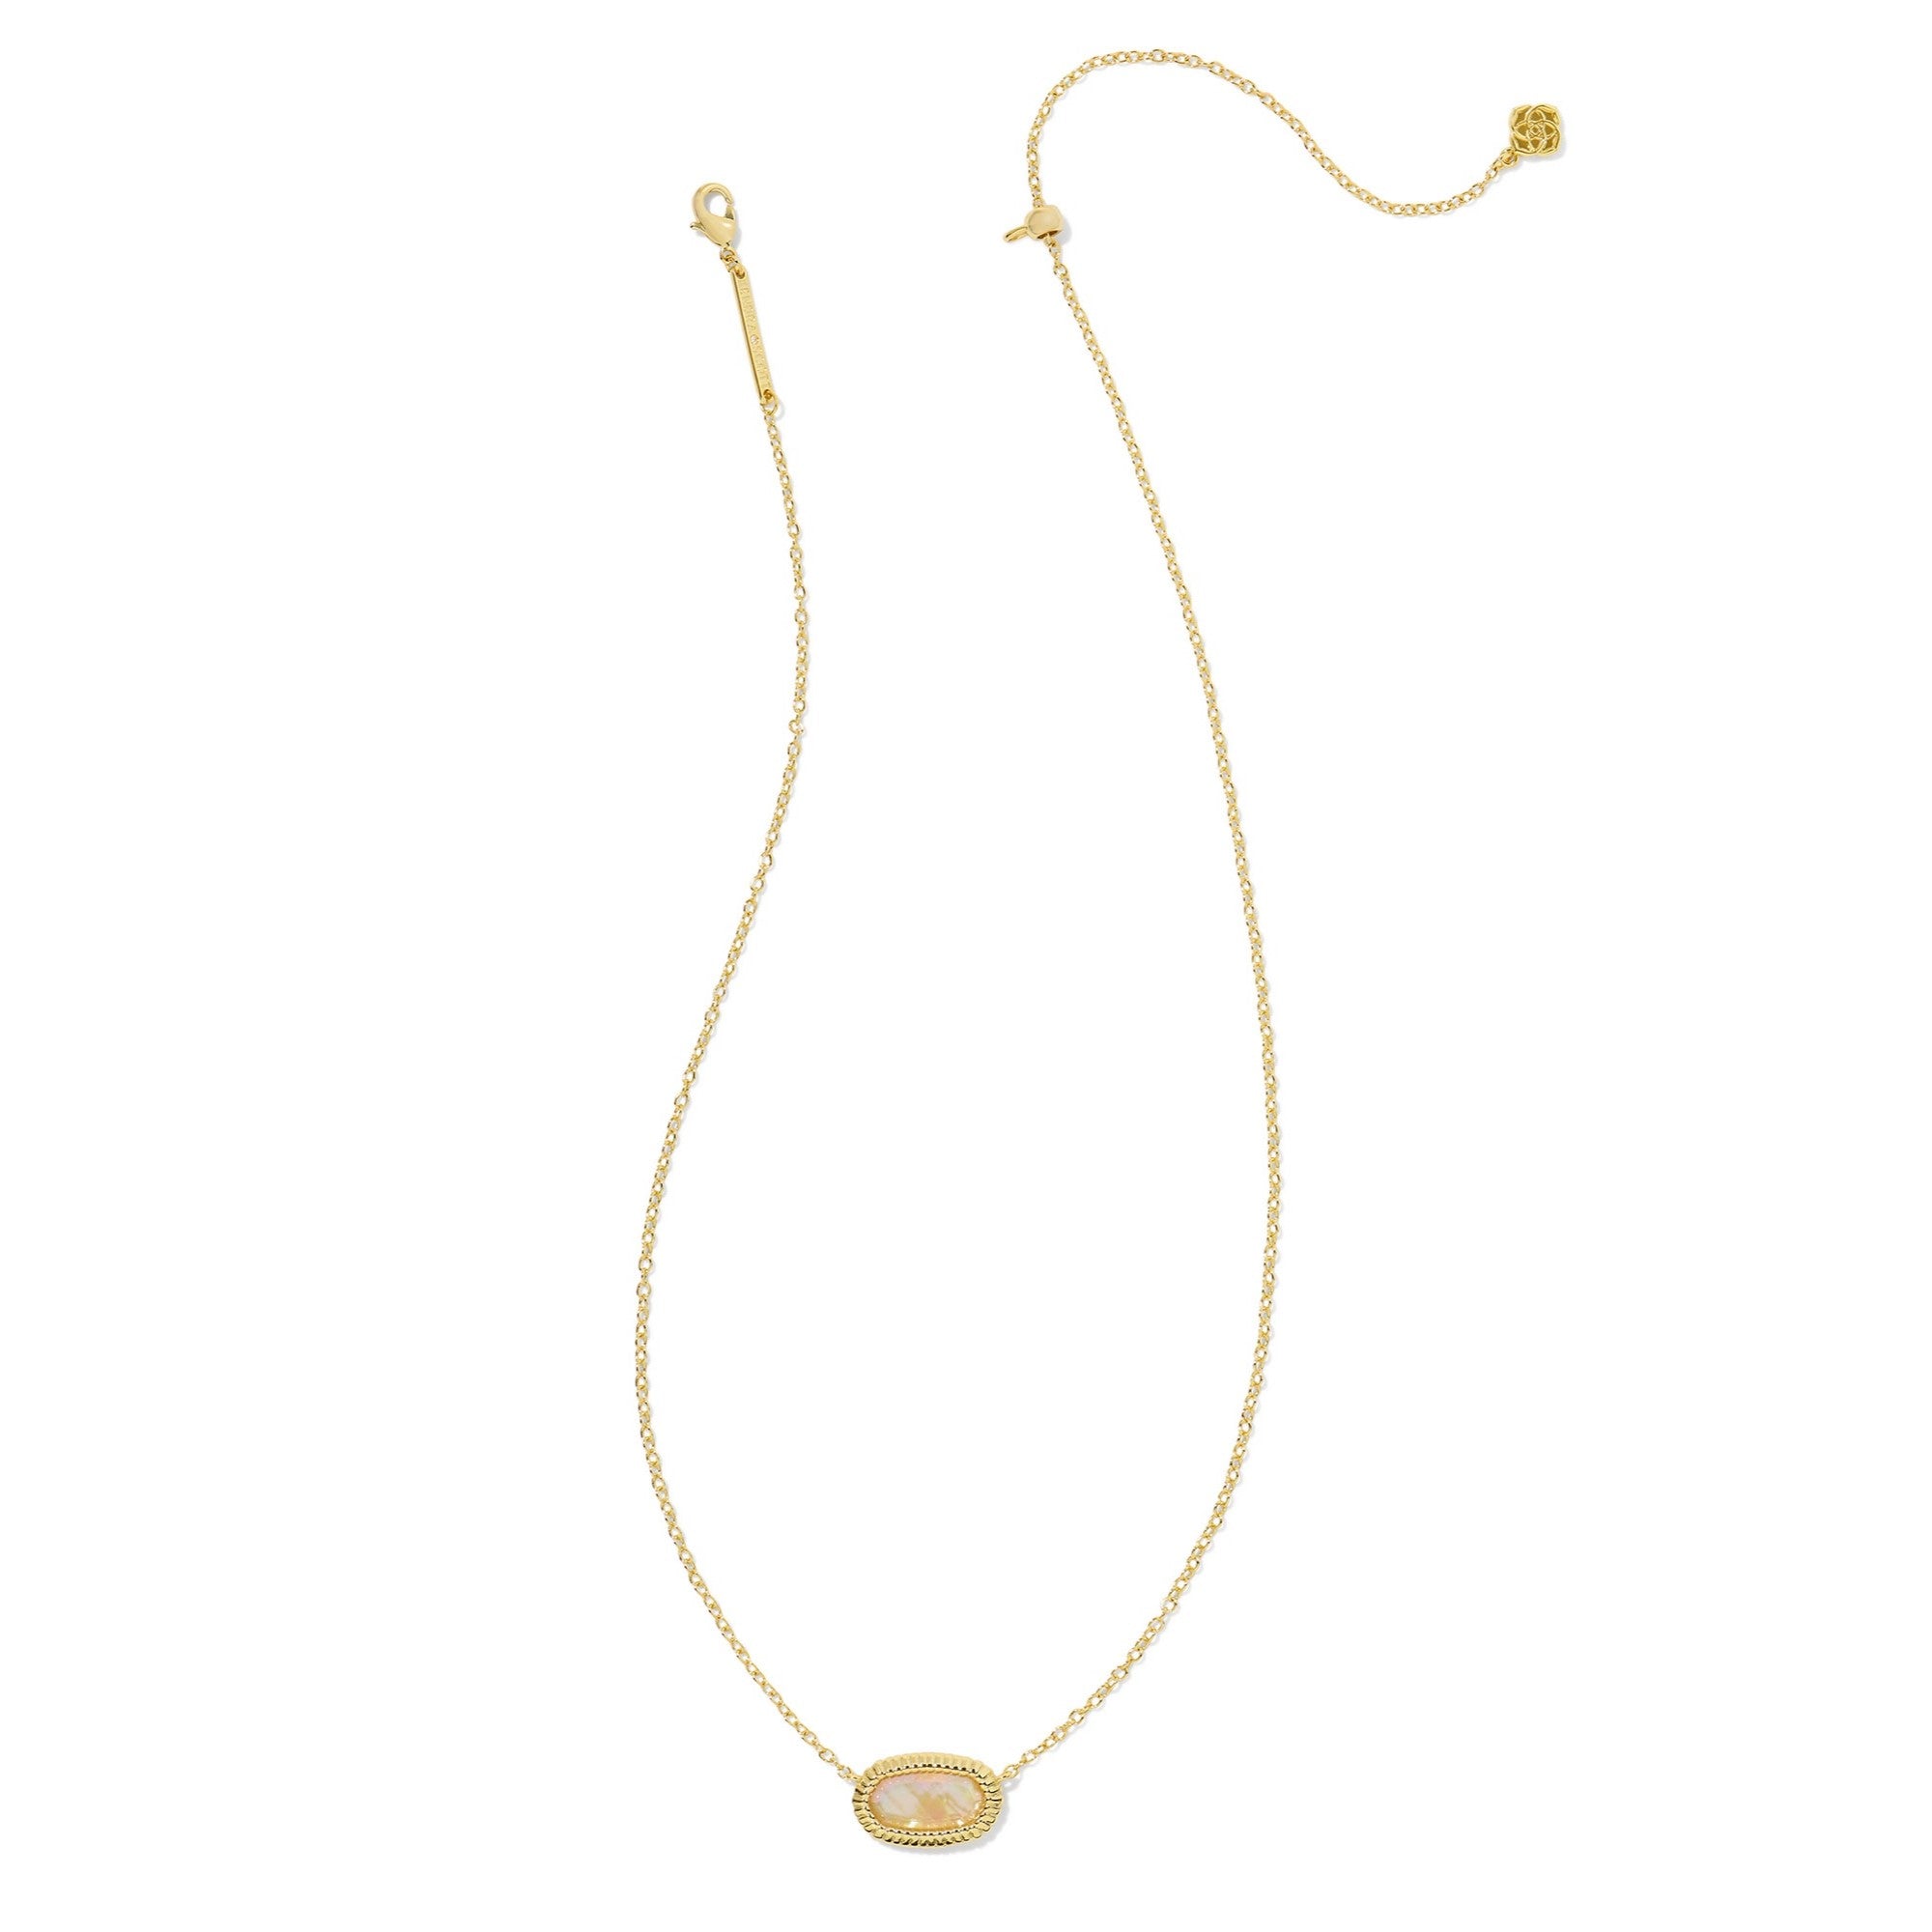 Kendra Scott | Elisa Gold Ridge Frame Short Pendant Necklace in Golden Abalone - Giddy Up Glamour Boutique